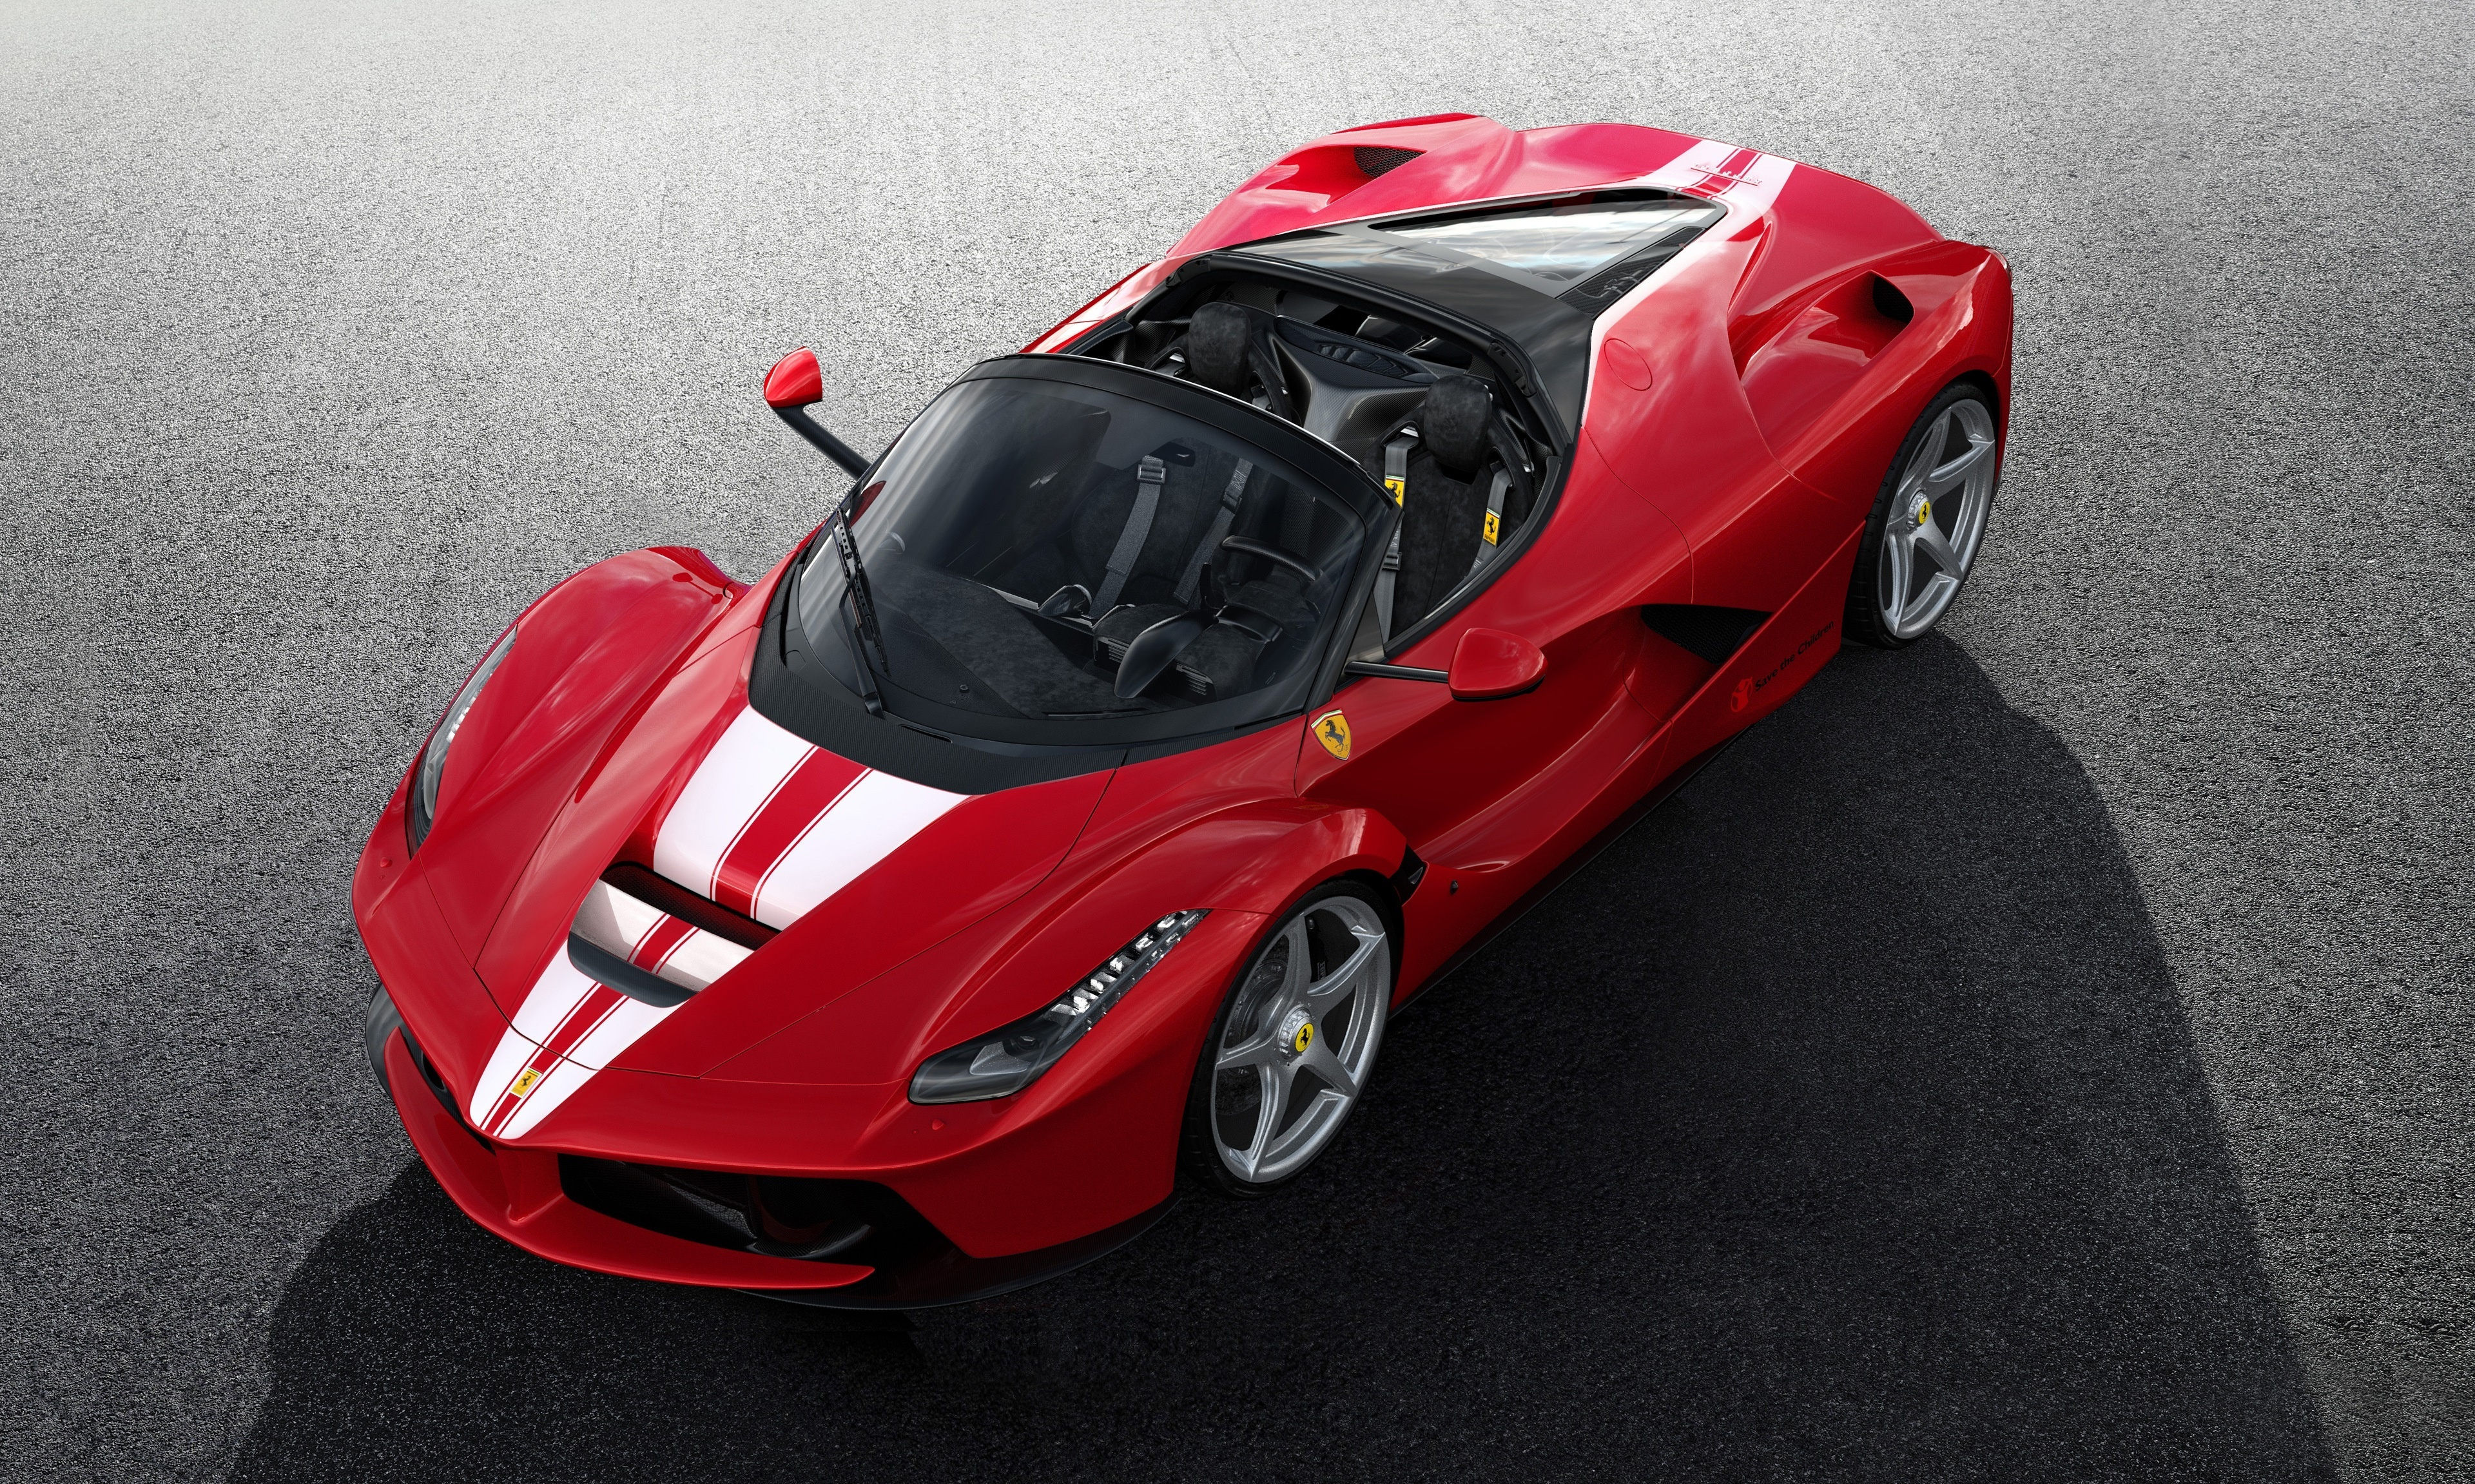 Red Convertible, Ferrari Laferrari Aperta, Supercar, - Ferrari Laferrari Aperta - HD Wallpaper 